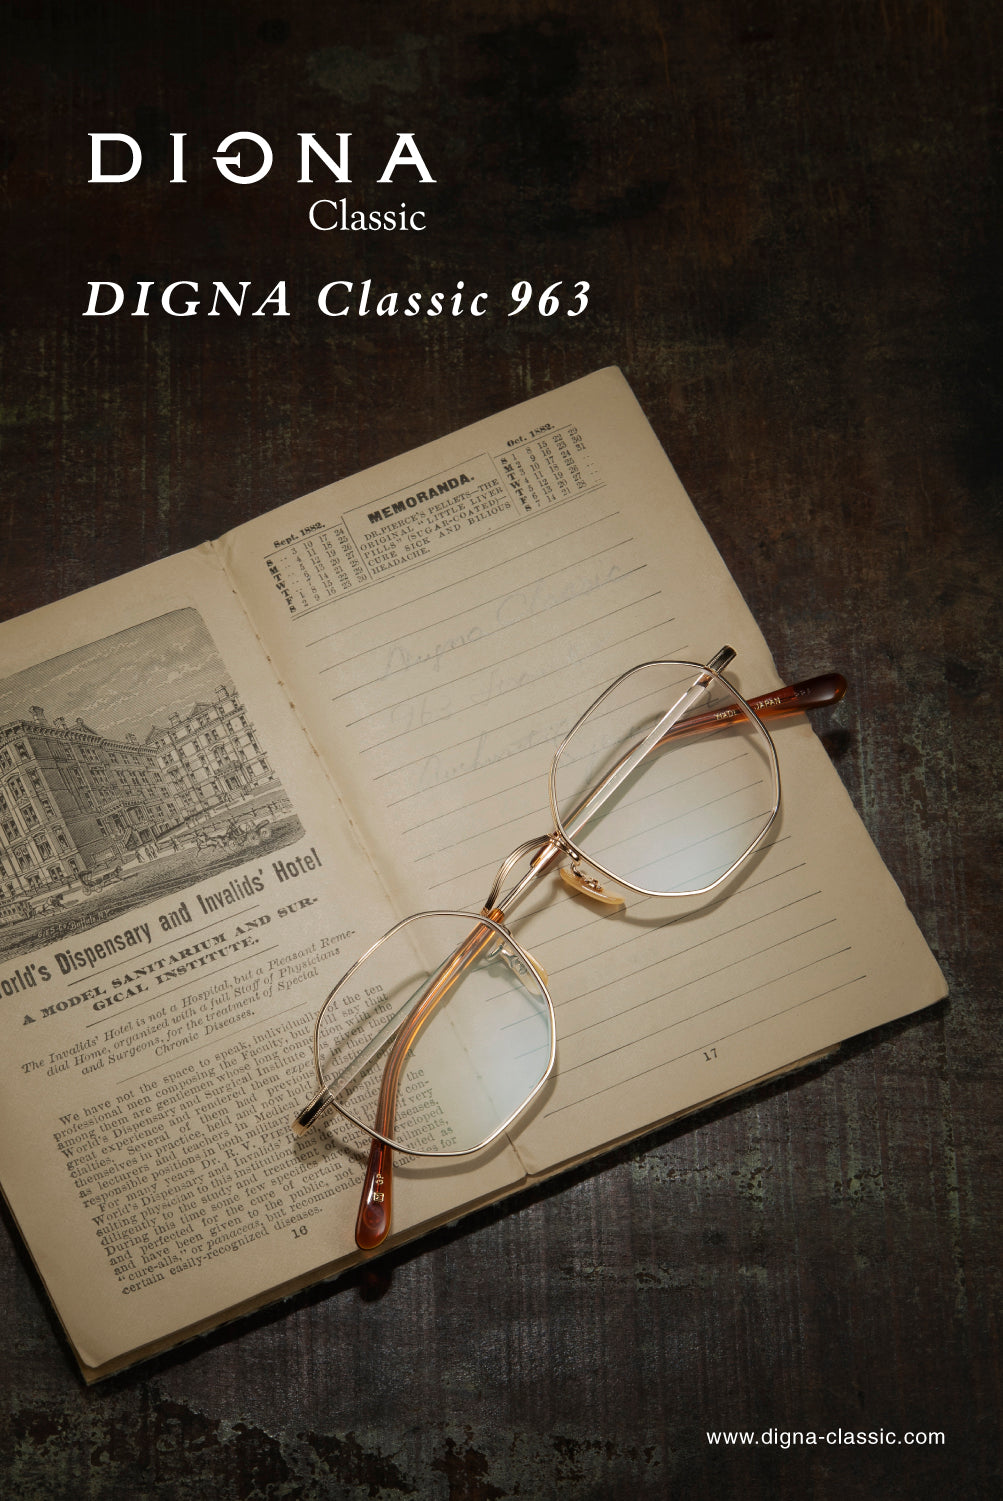 DIGNA Classic 963